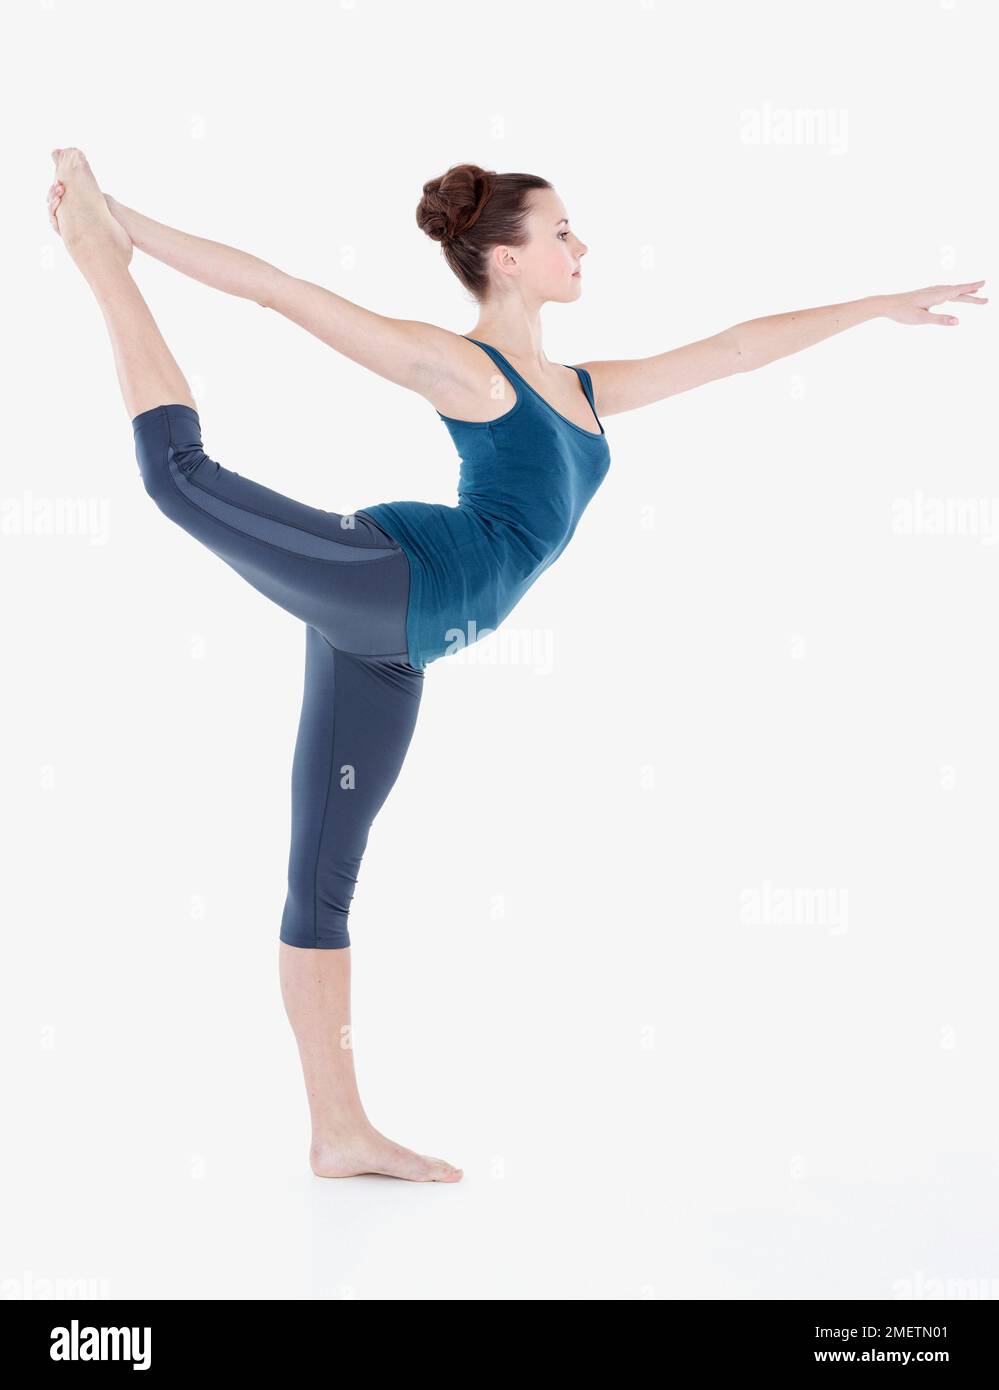 Woman doing gymnastics exercise Stock Photo